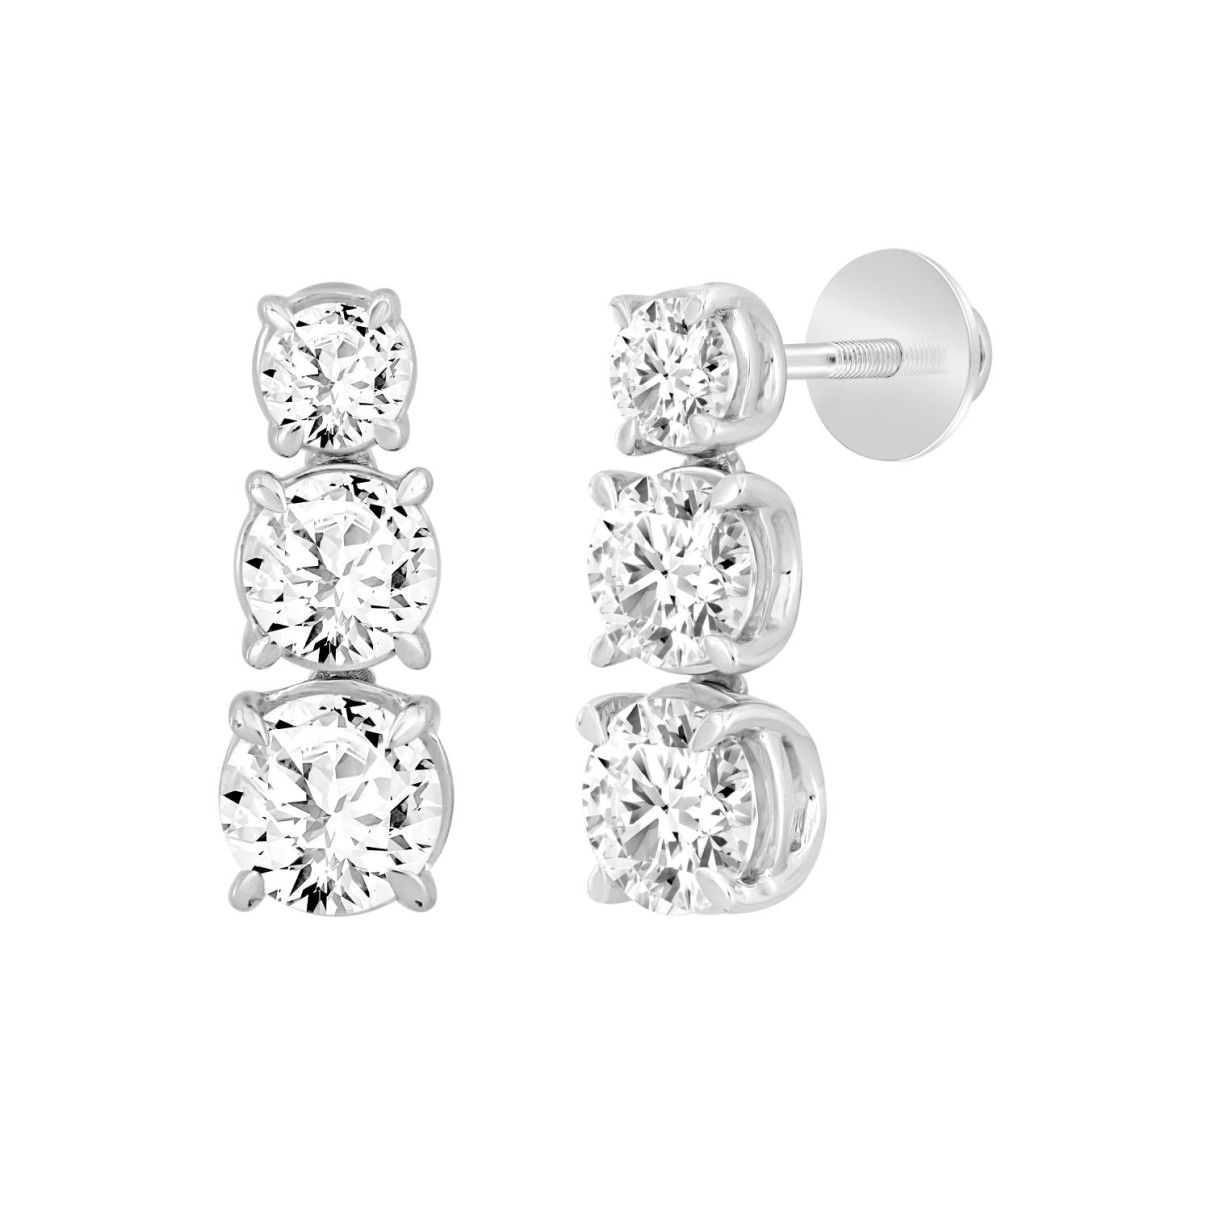 LADIES EARRINGS 3CT ROUND DIAMOND 14K WHITE GOLD (CENTER STONE ROUND DIAMOND 1 1/2CT )